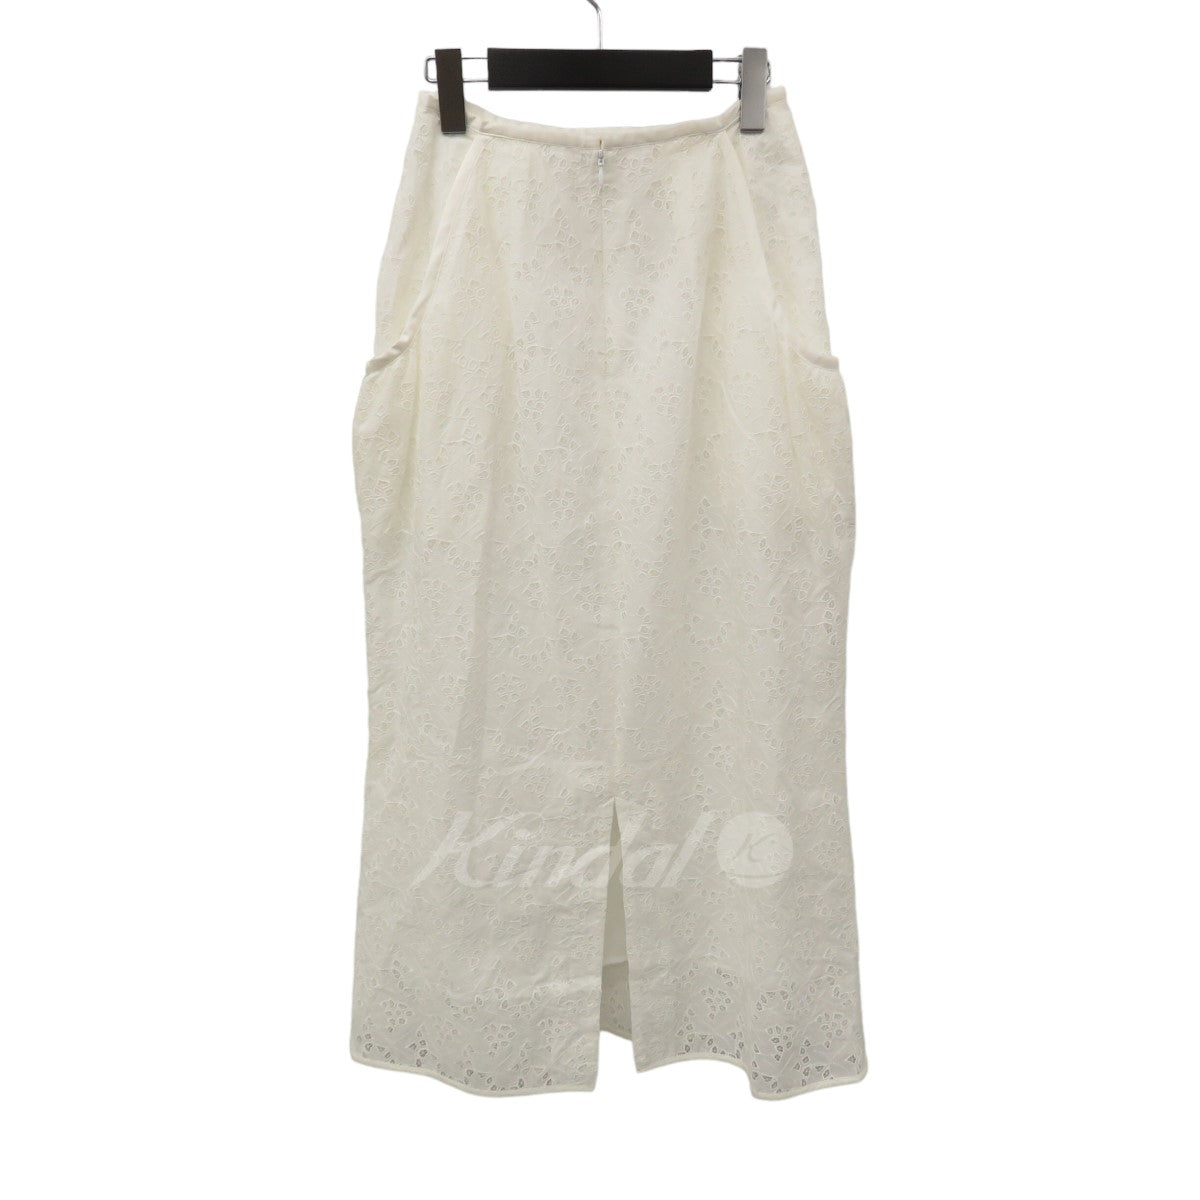 mame kurogouchi(マメ クロゴウチ) 21SS Embroidery Lace Cotton Skirt コットンレーススカート